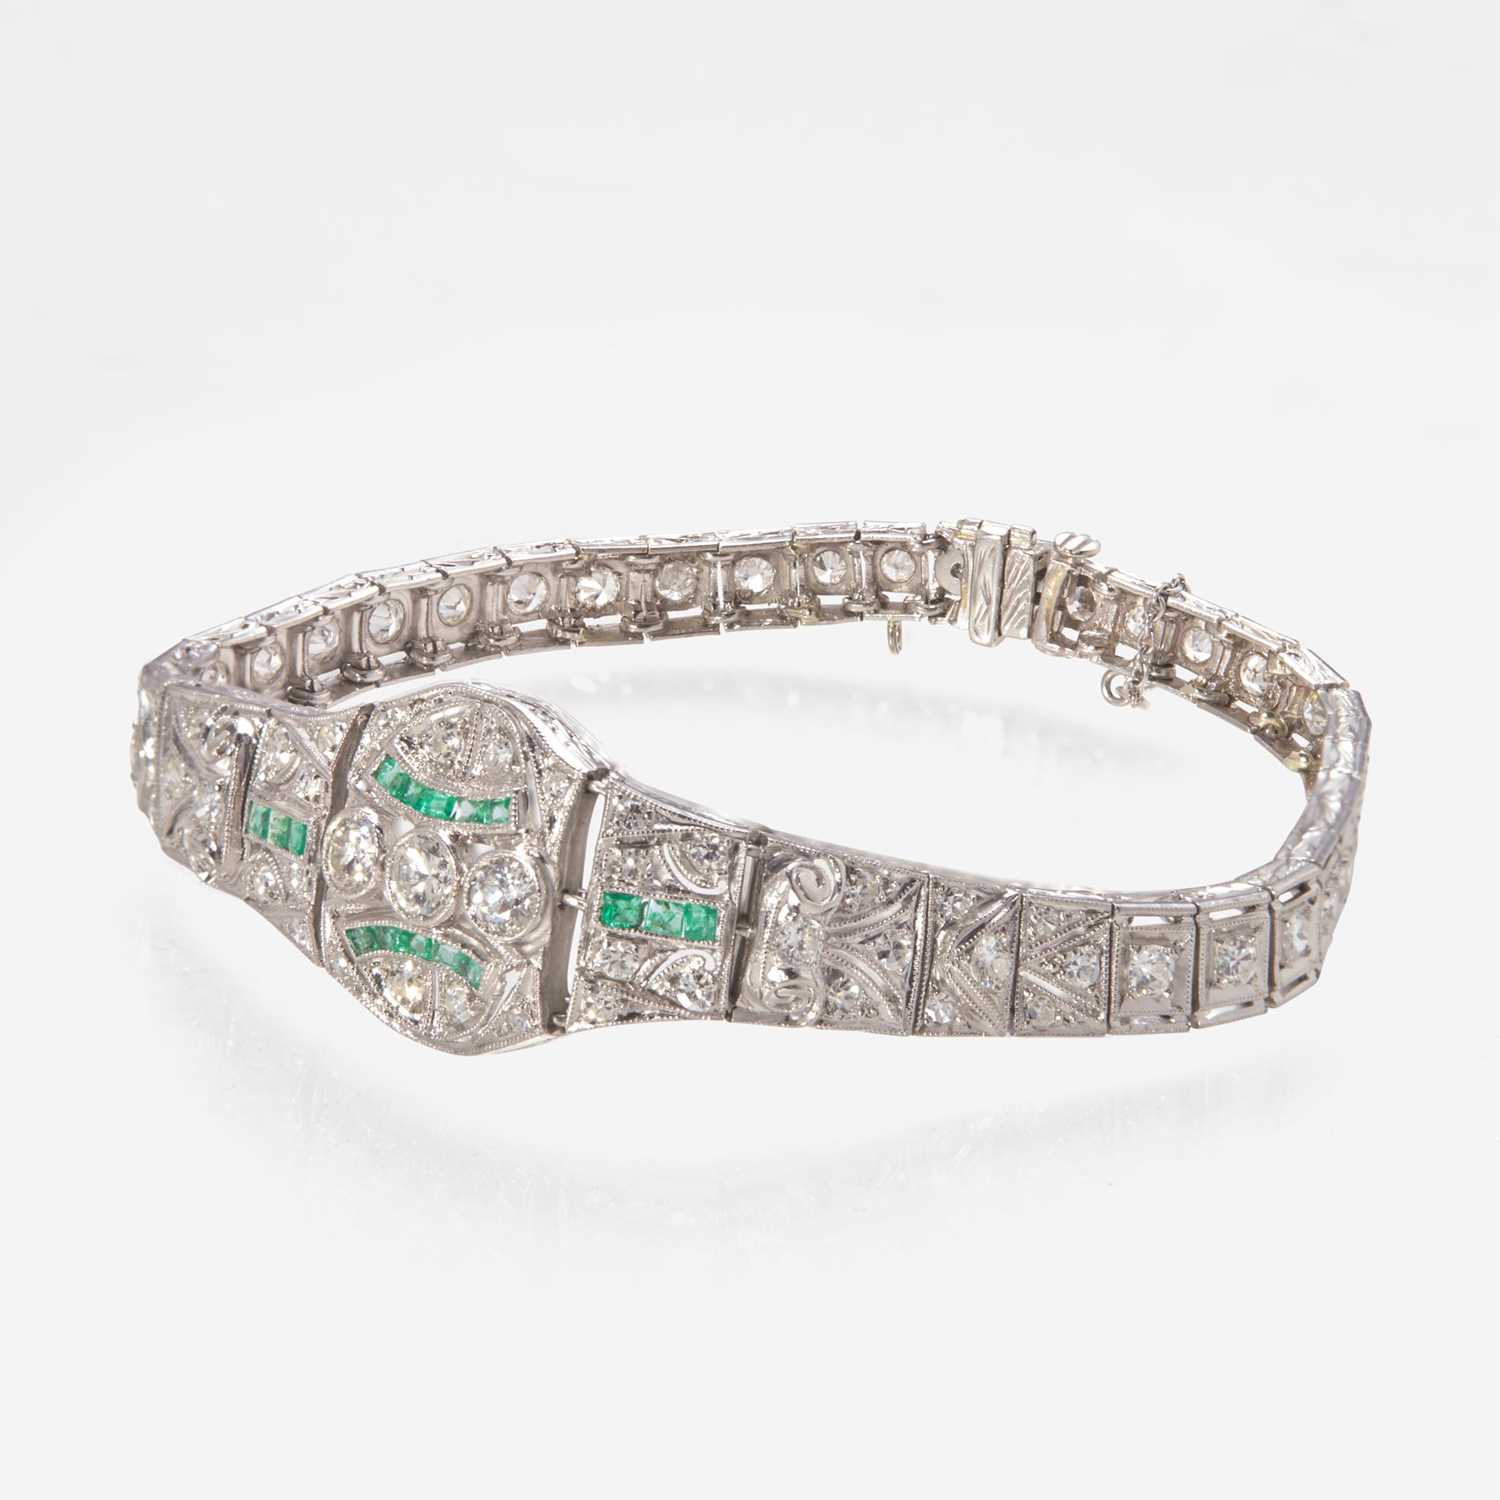 Lot 4 - An Art Deco Platinum, Emerald, and Diamond Bracelet